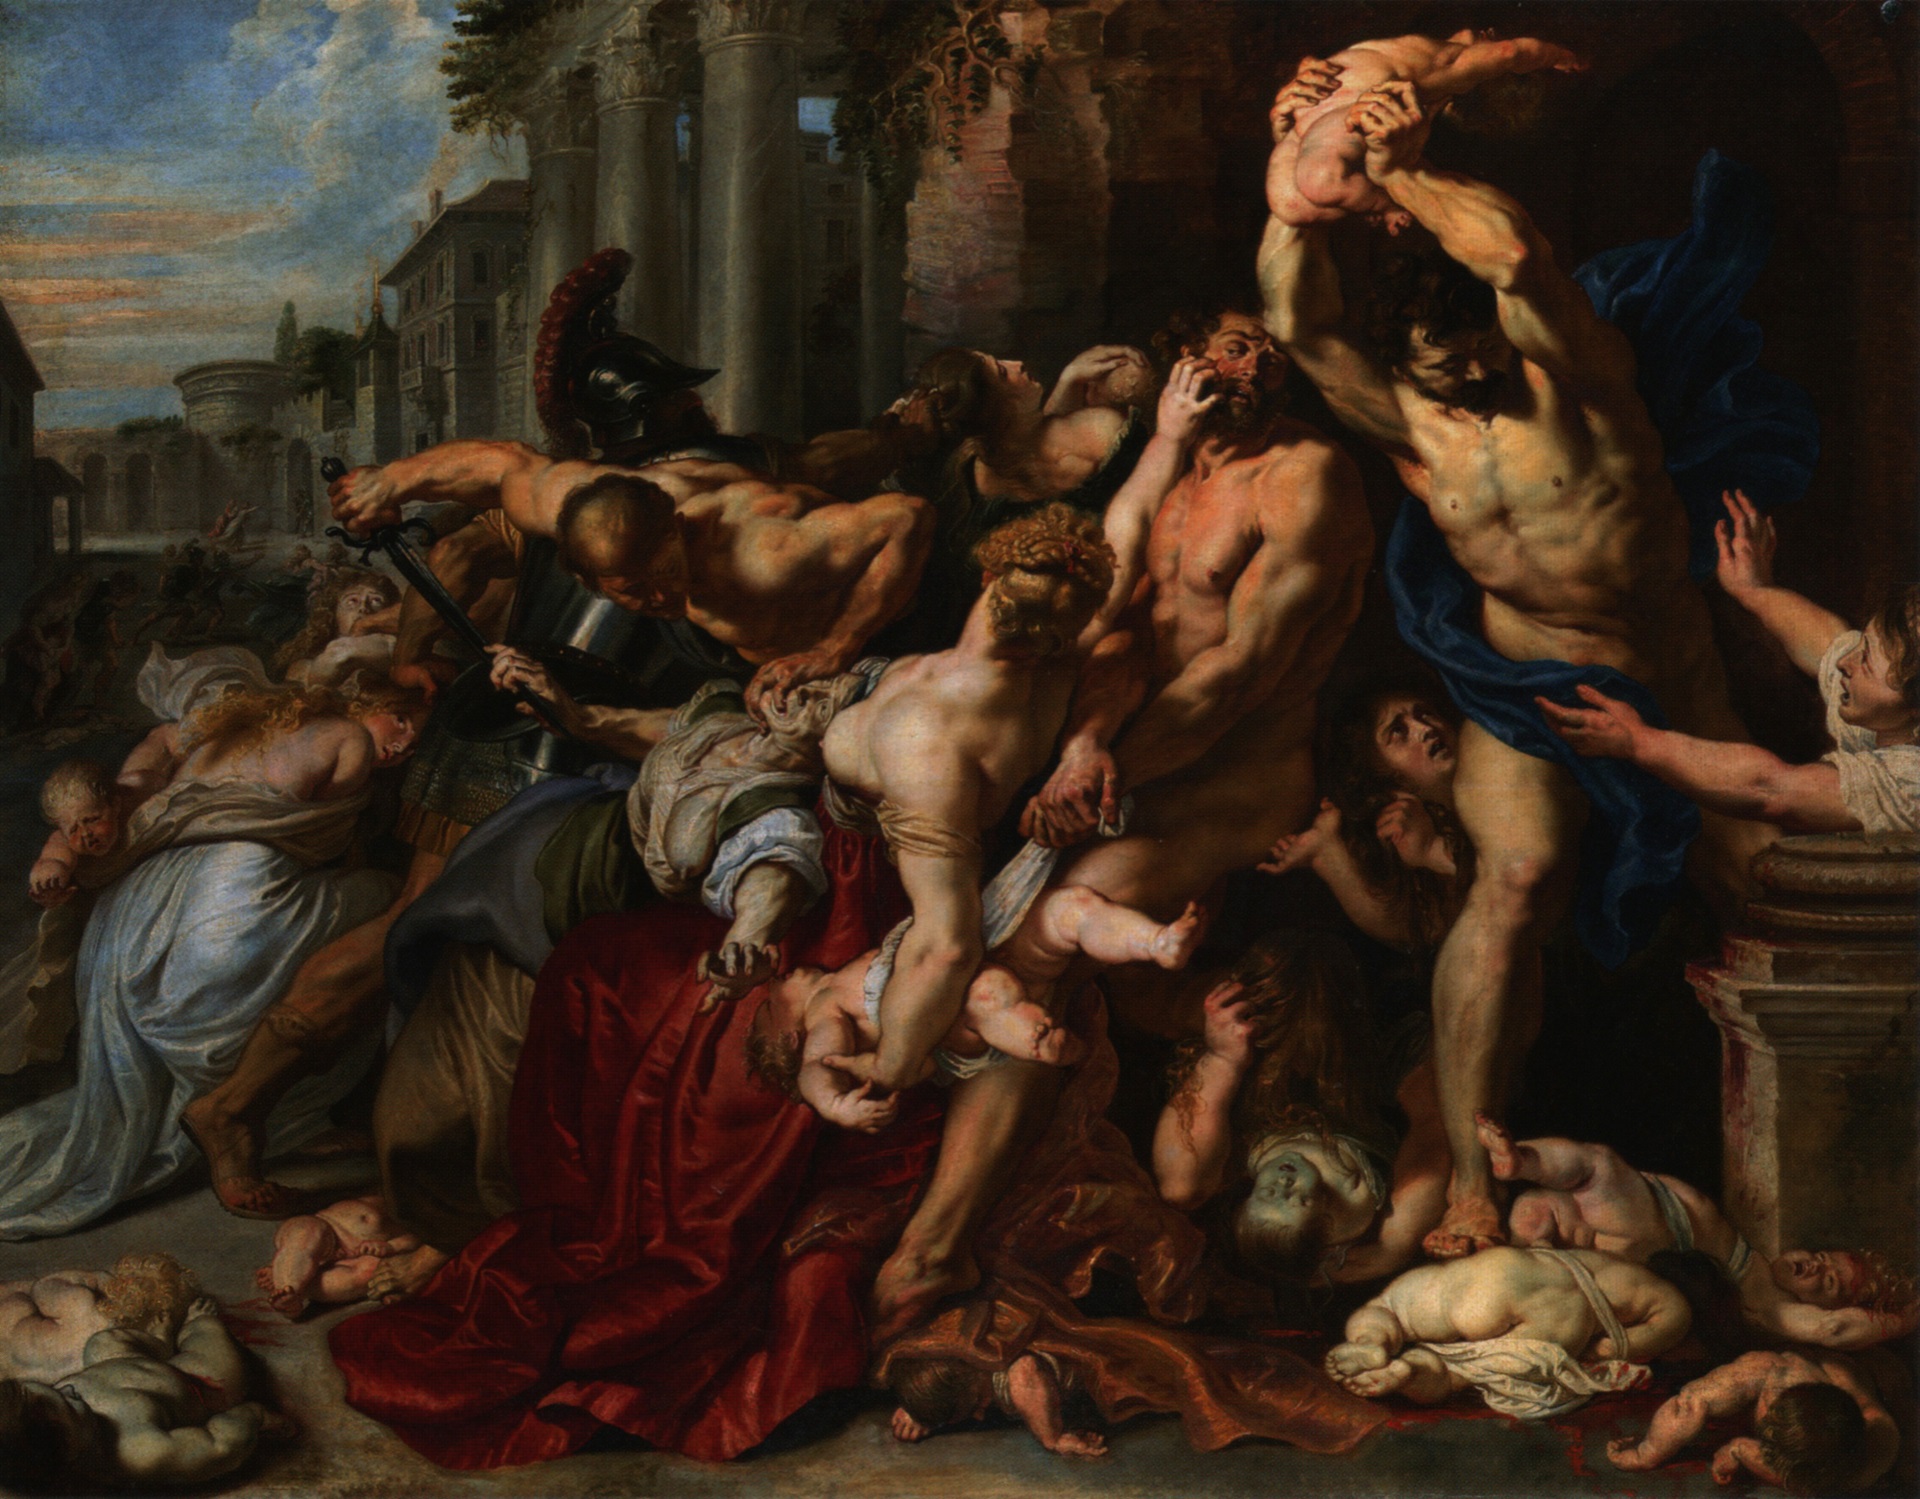 Peter Paul Rubens Massacre of the Innocents 1611